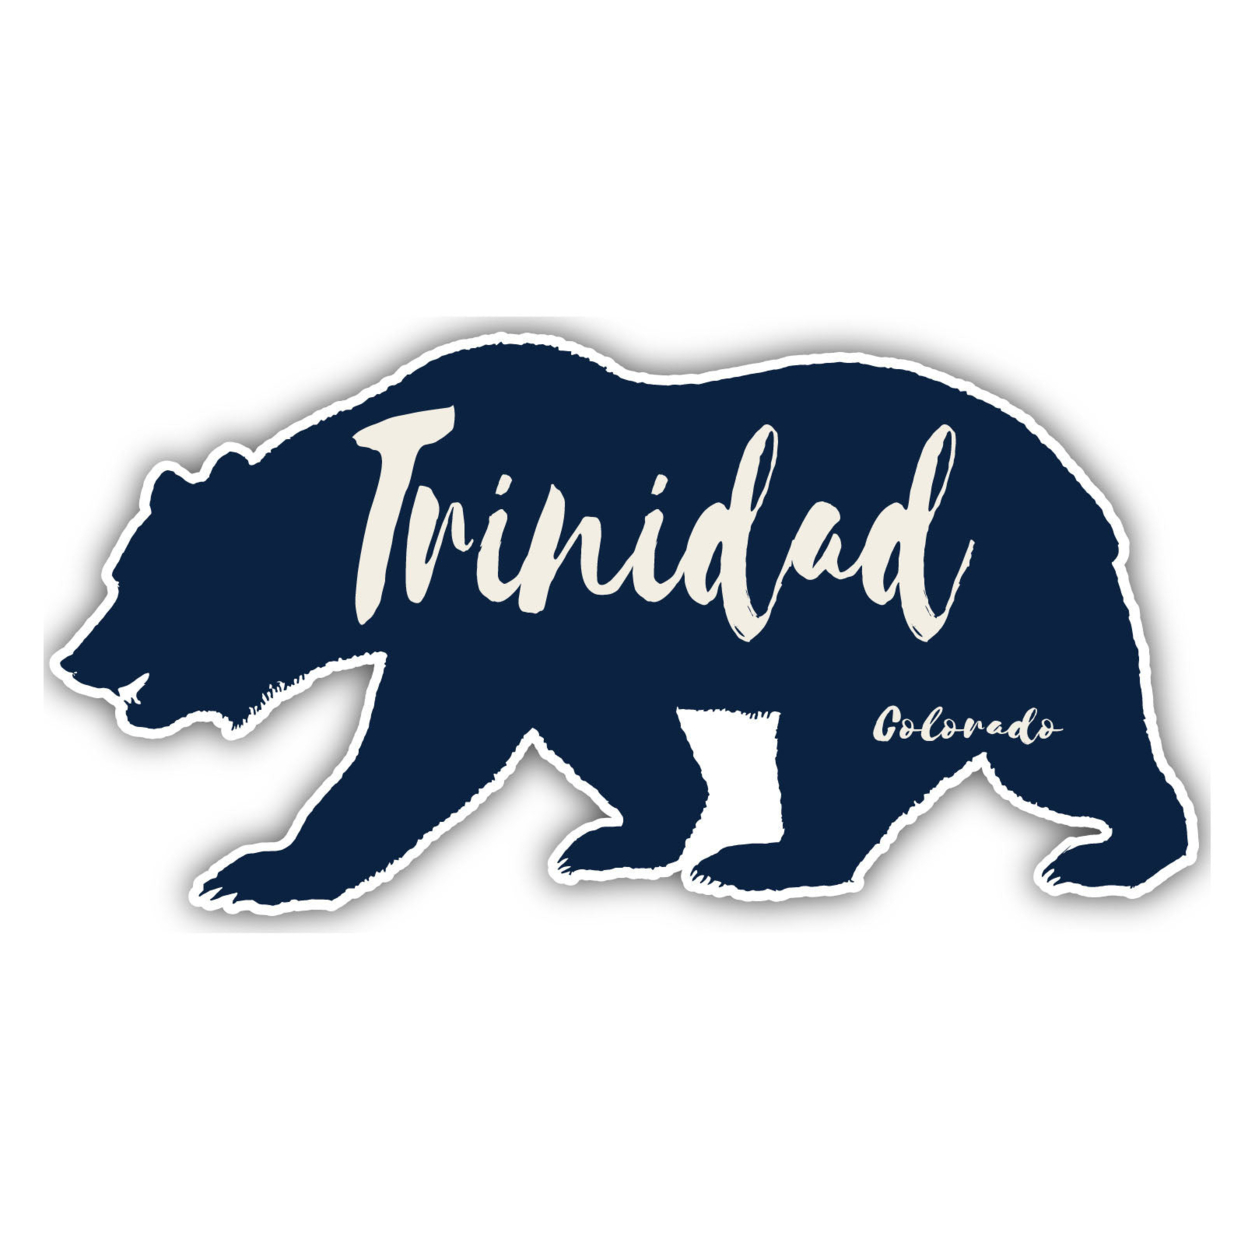 Trinidad Colorado Souvenir Decorative Stickers (Choose Theme And Size) - Single Unit, 4-Inch, Tent